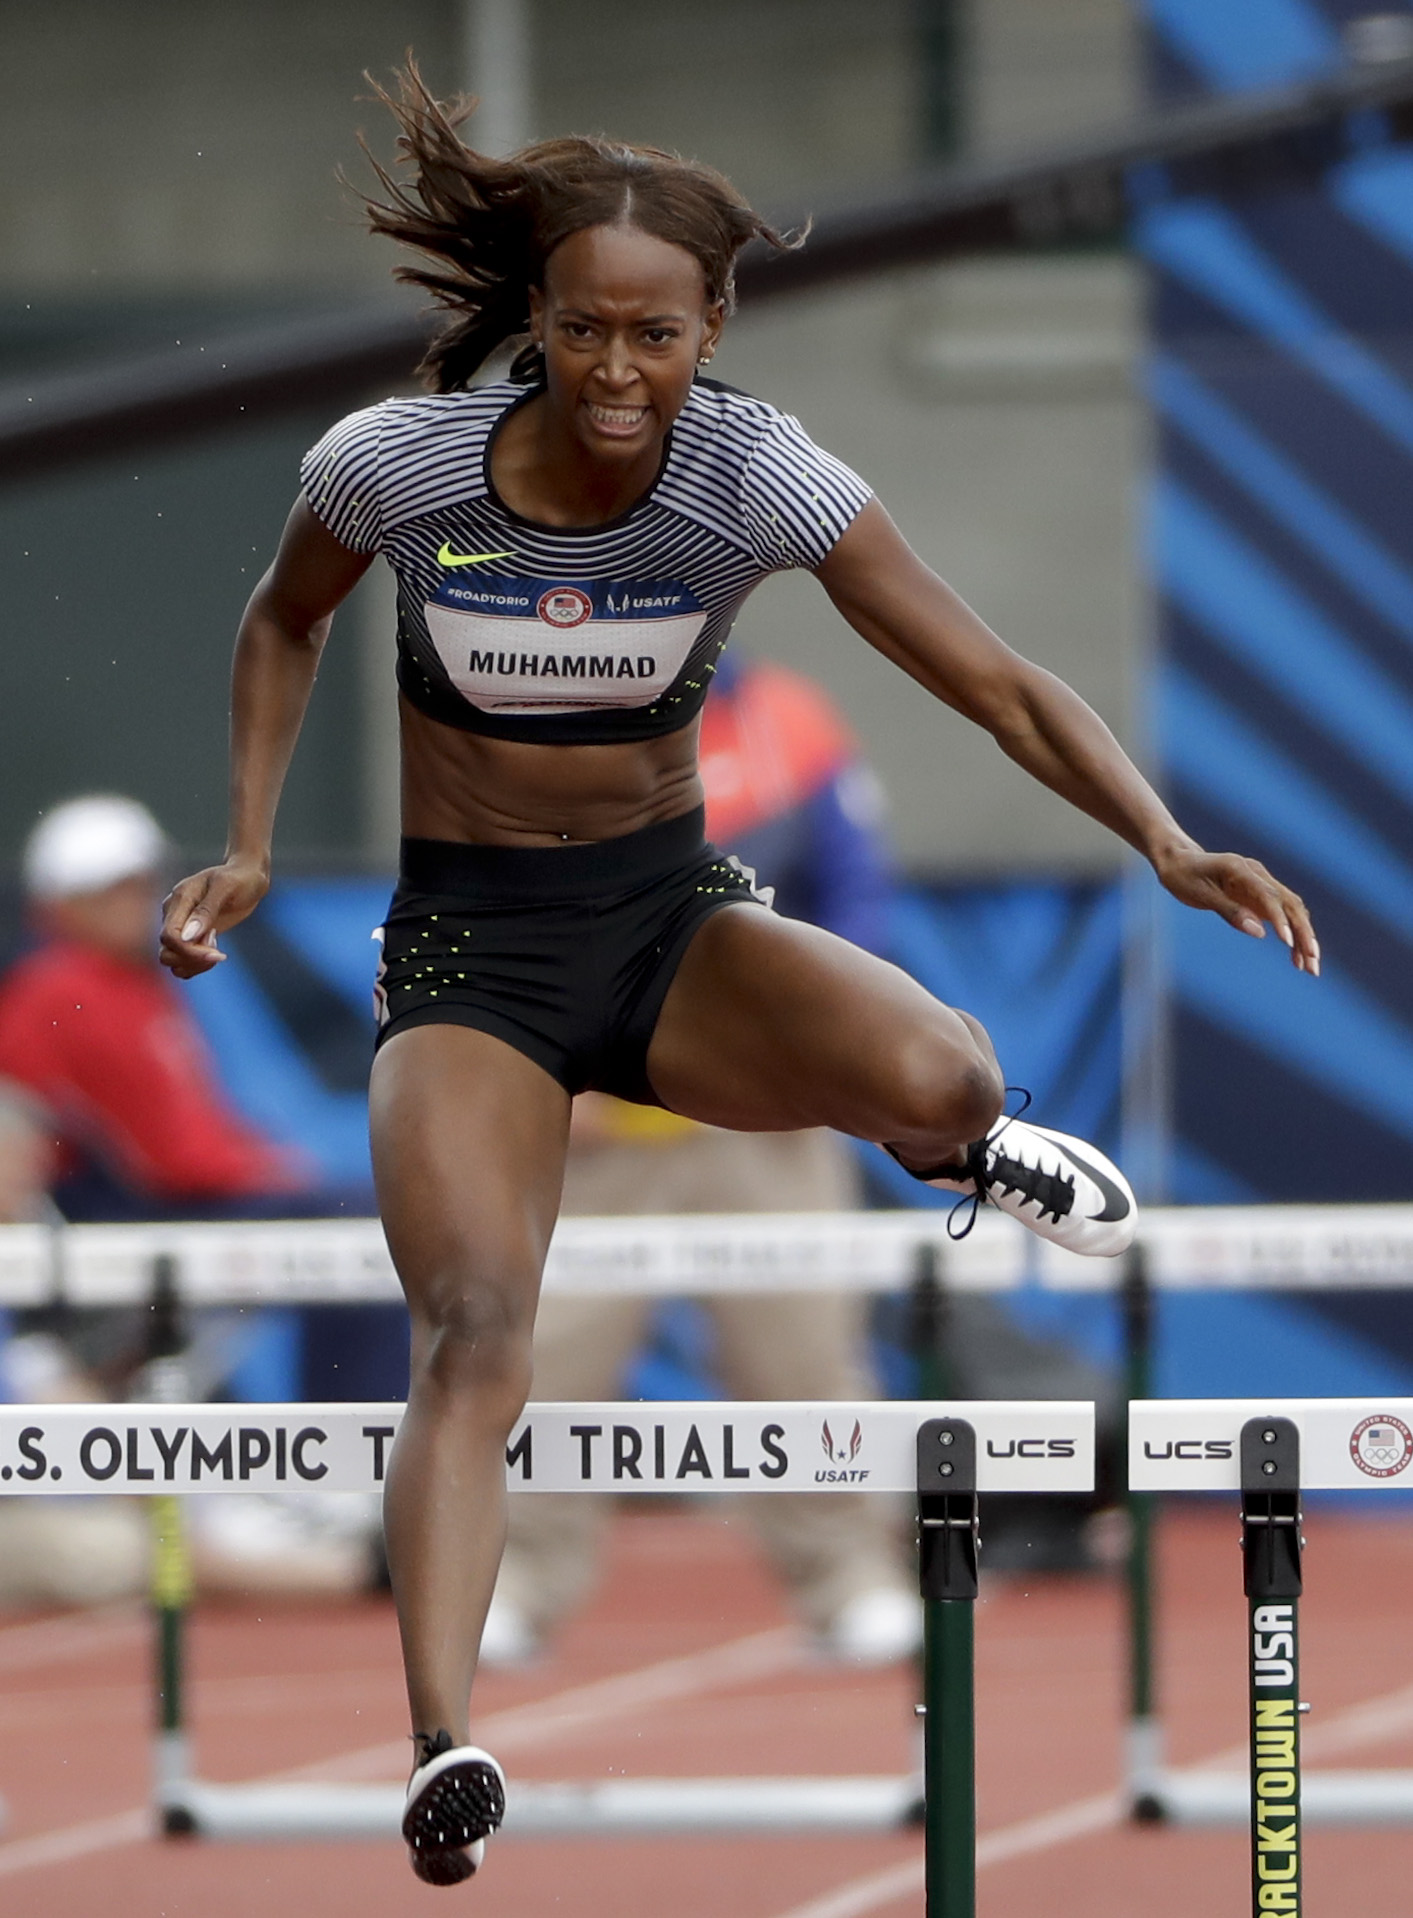 McLaughlin sets world record as U.S. women finish 1-2 in 400 hurdles